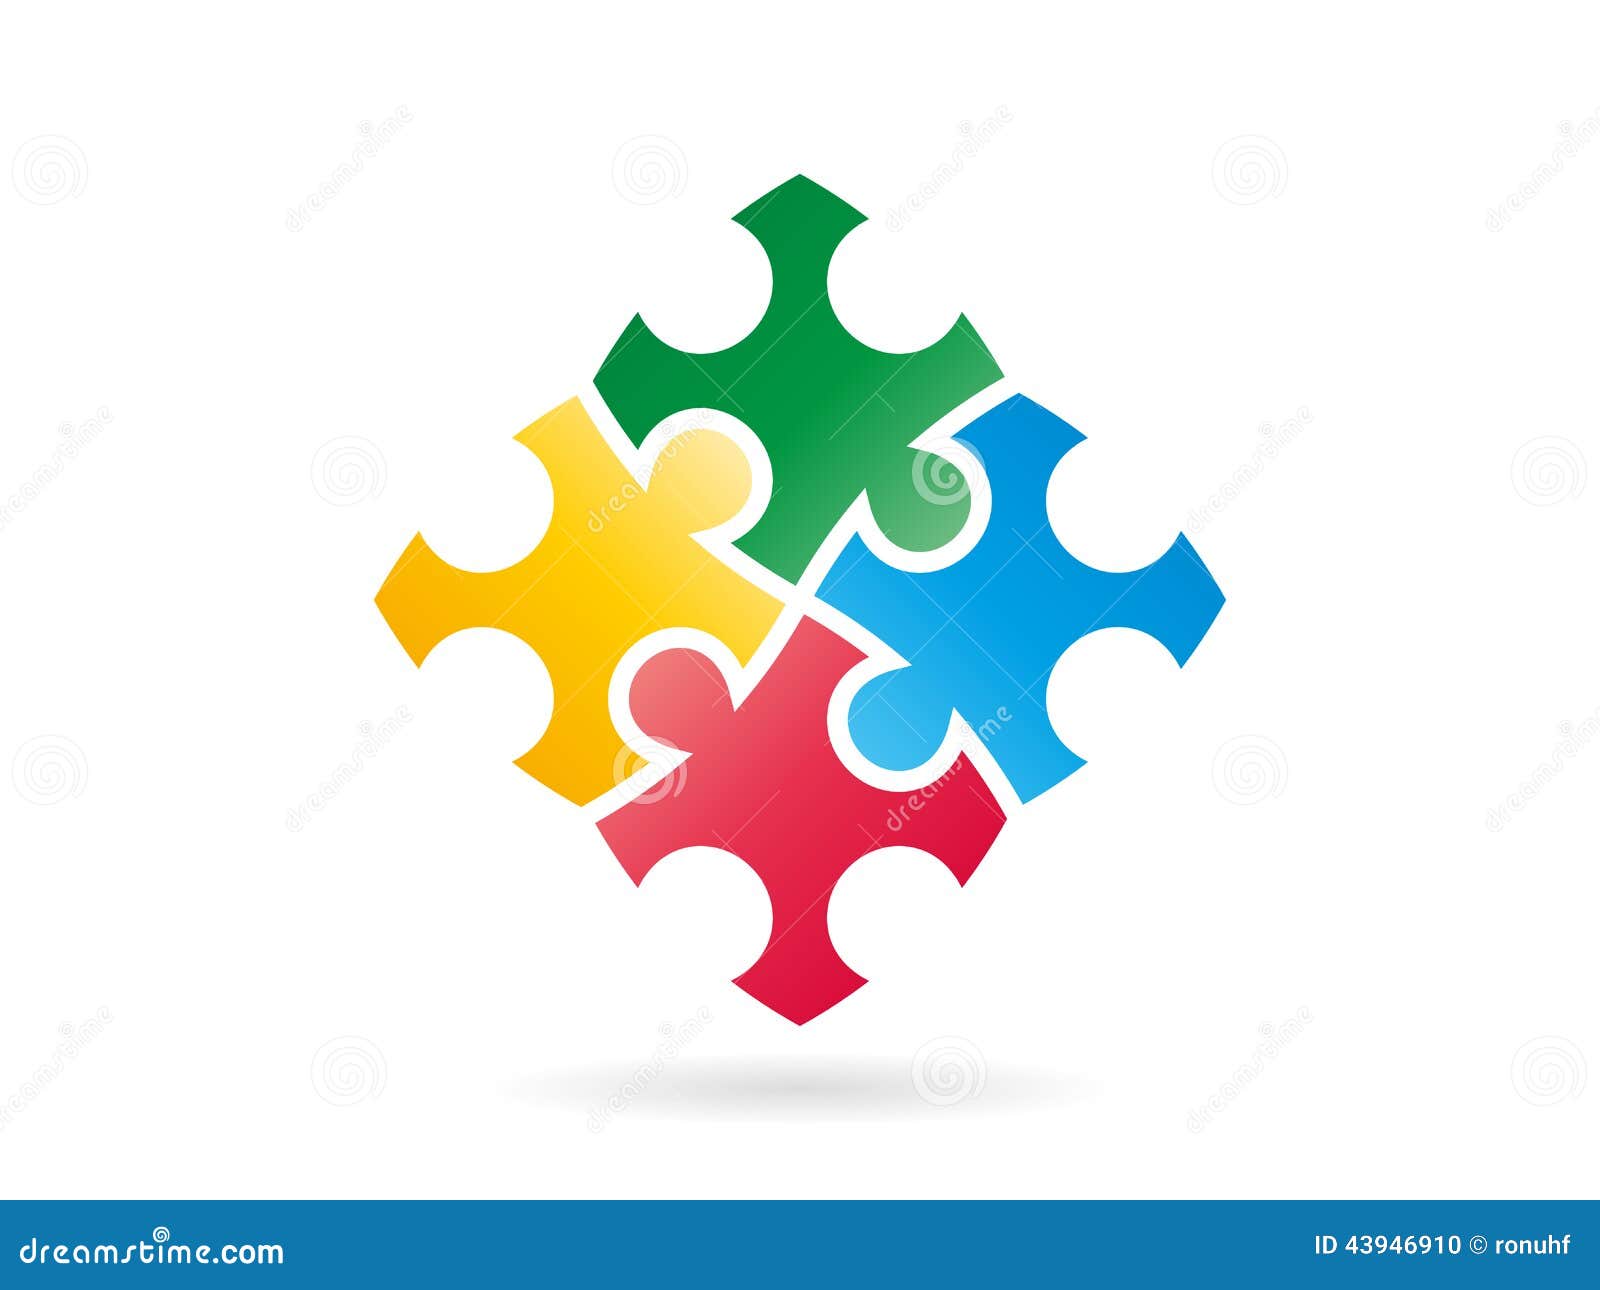 Jigsaw Puzzle 12 Stock Illustrations – 61 Jigsaw Puzzle 12 Stock  Illustrations, Vectors & Clipart - Dreamstime